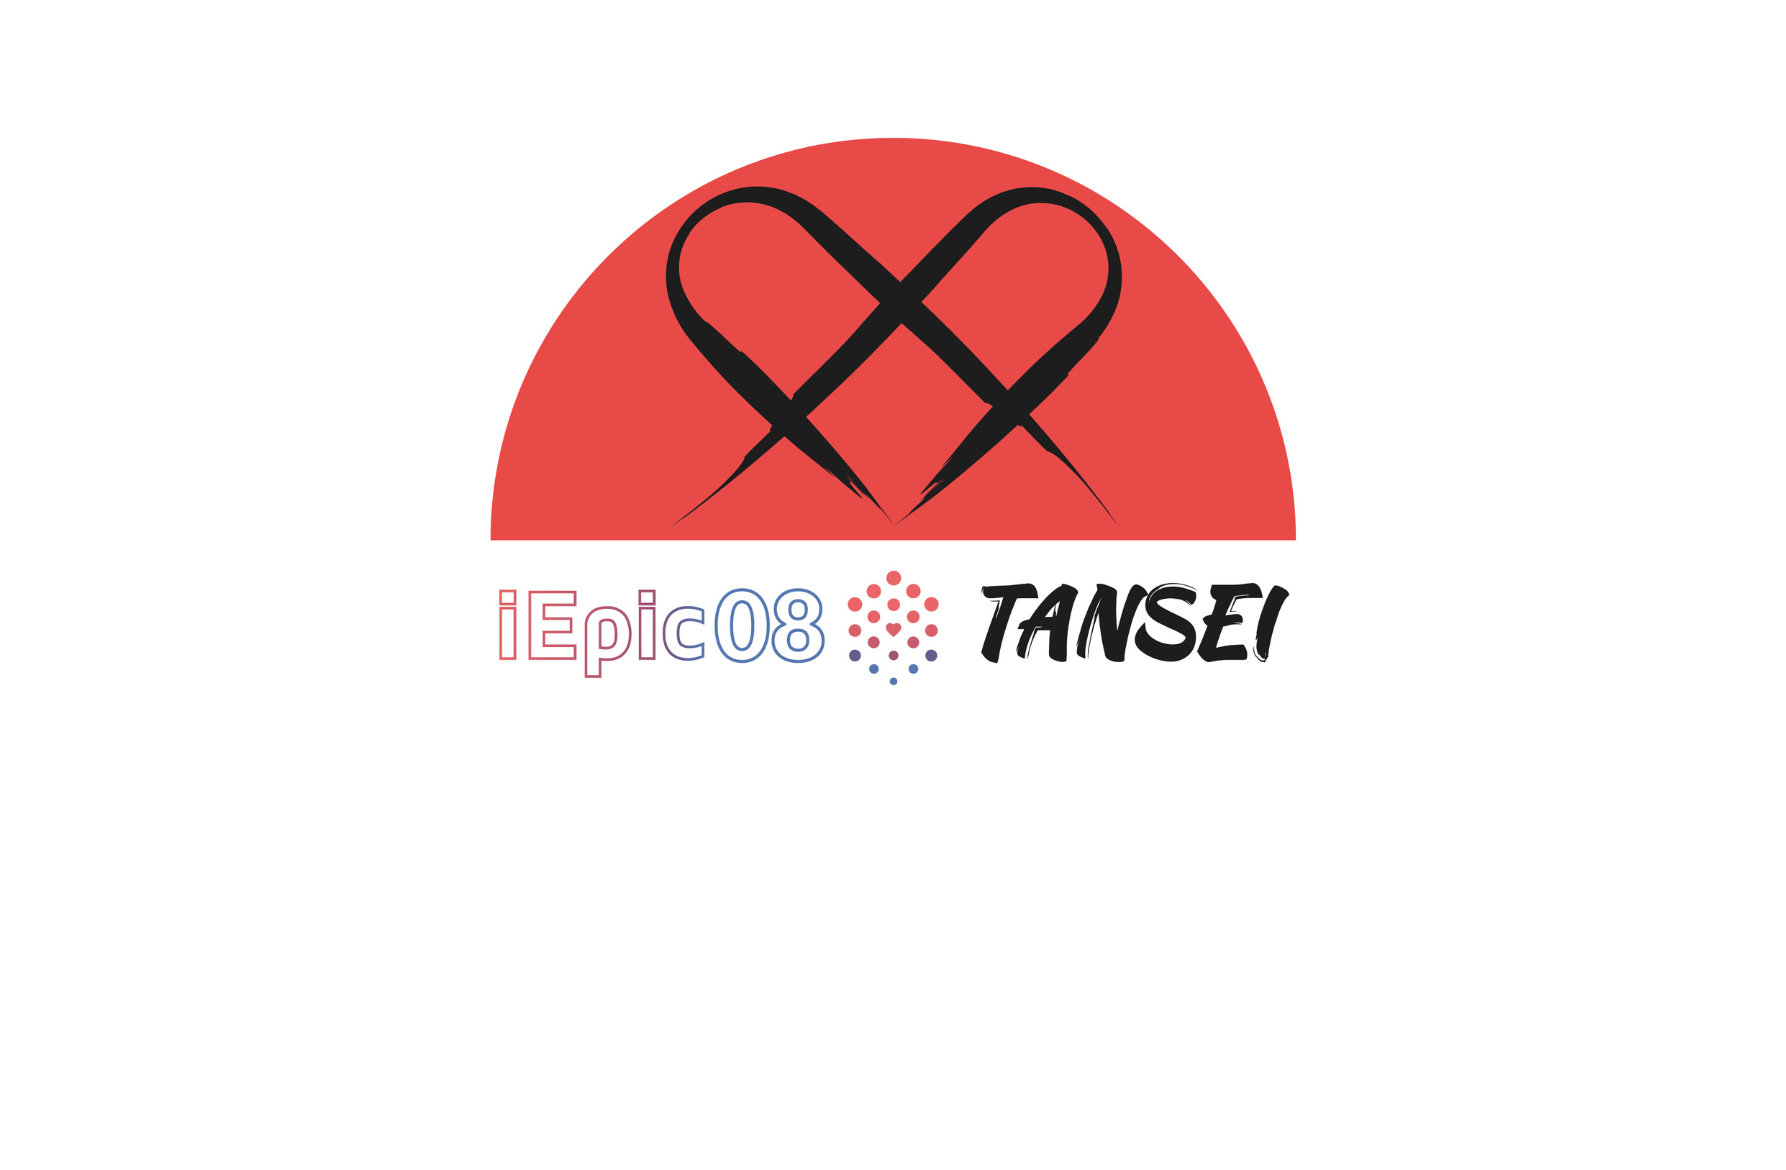 TANSEI EPIC08